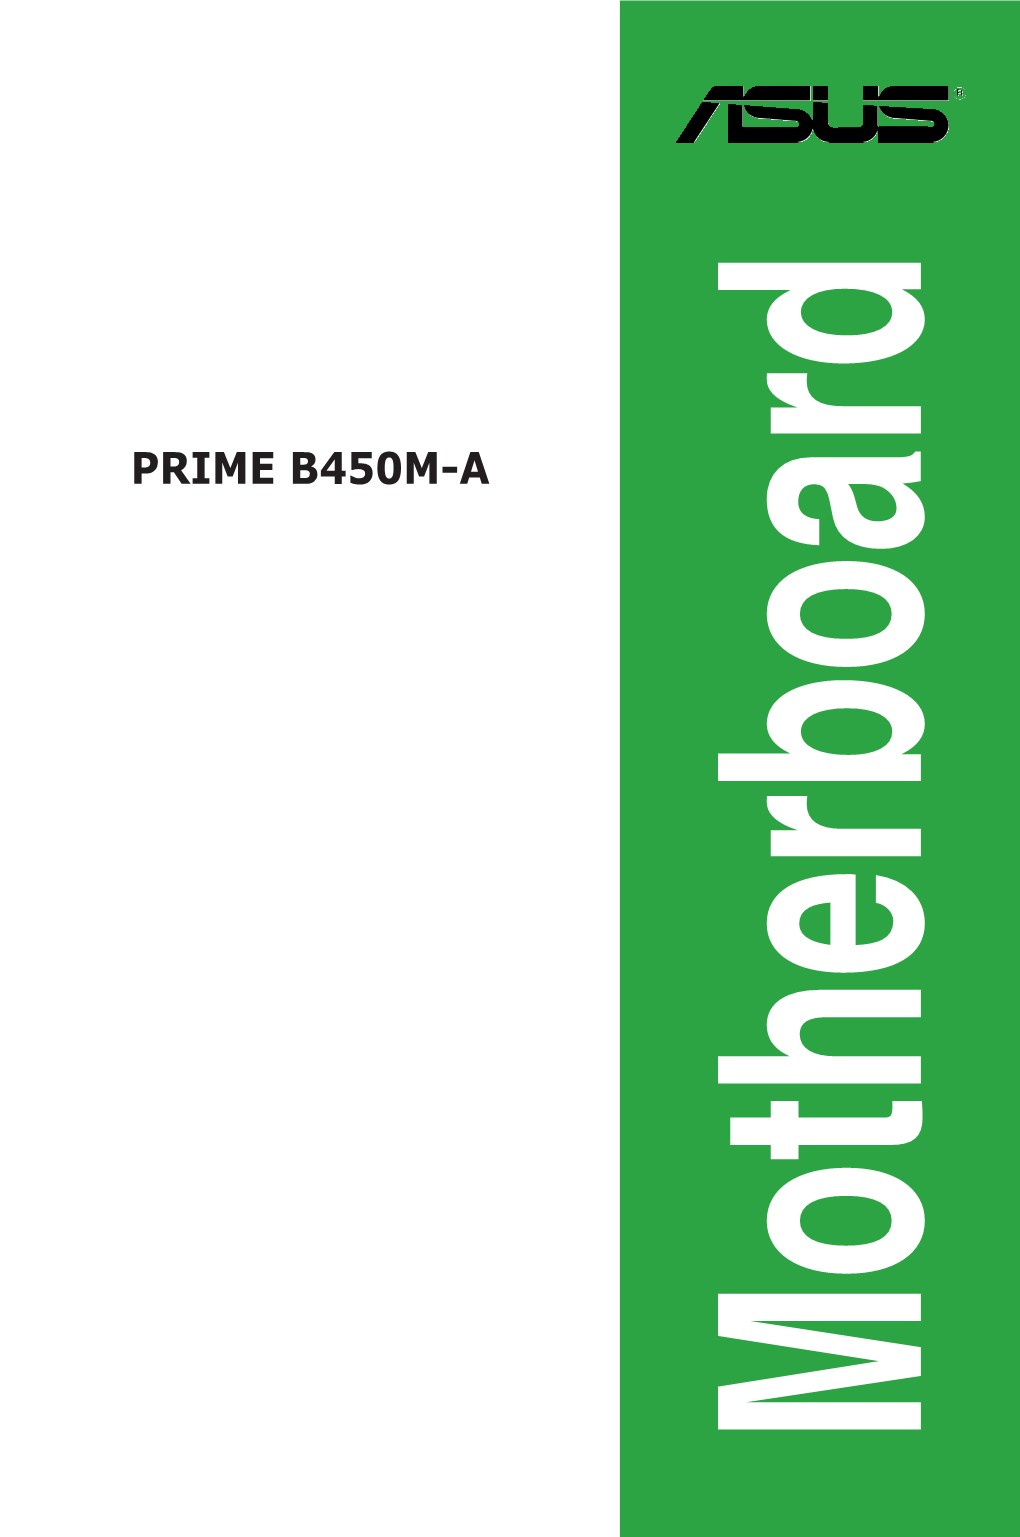 Prime B450m-A